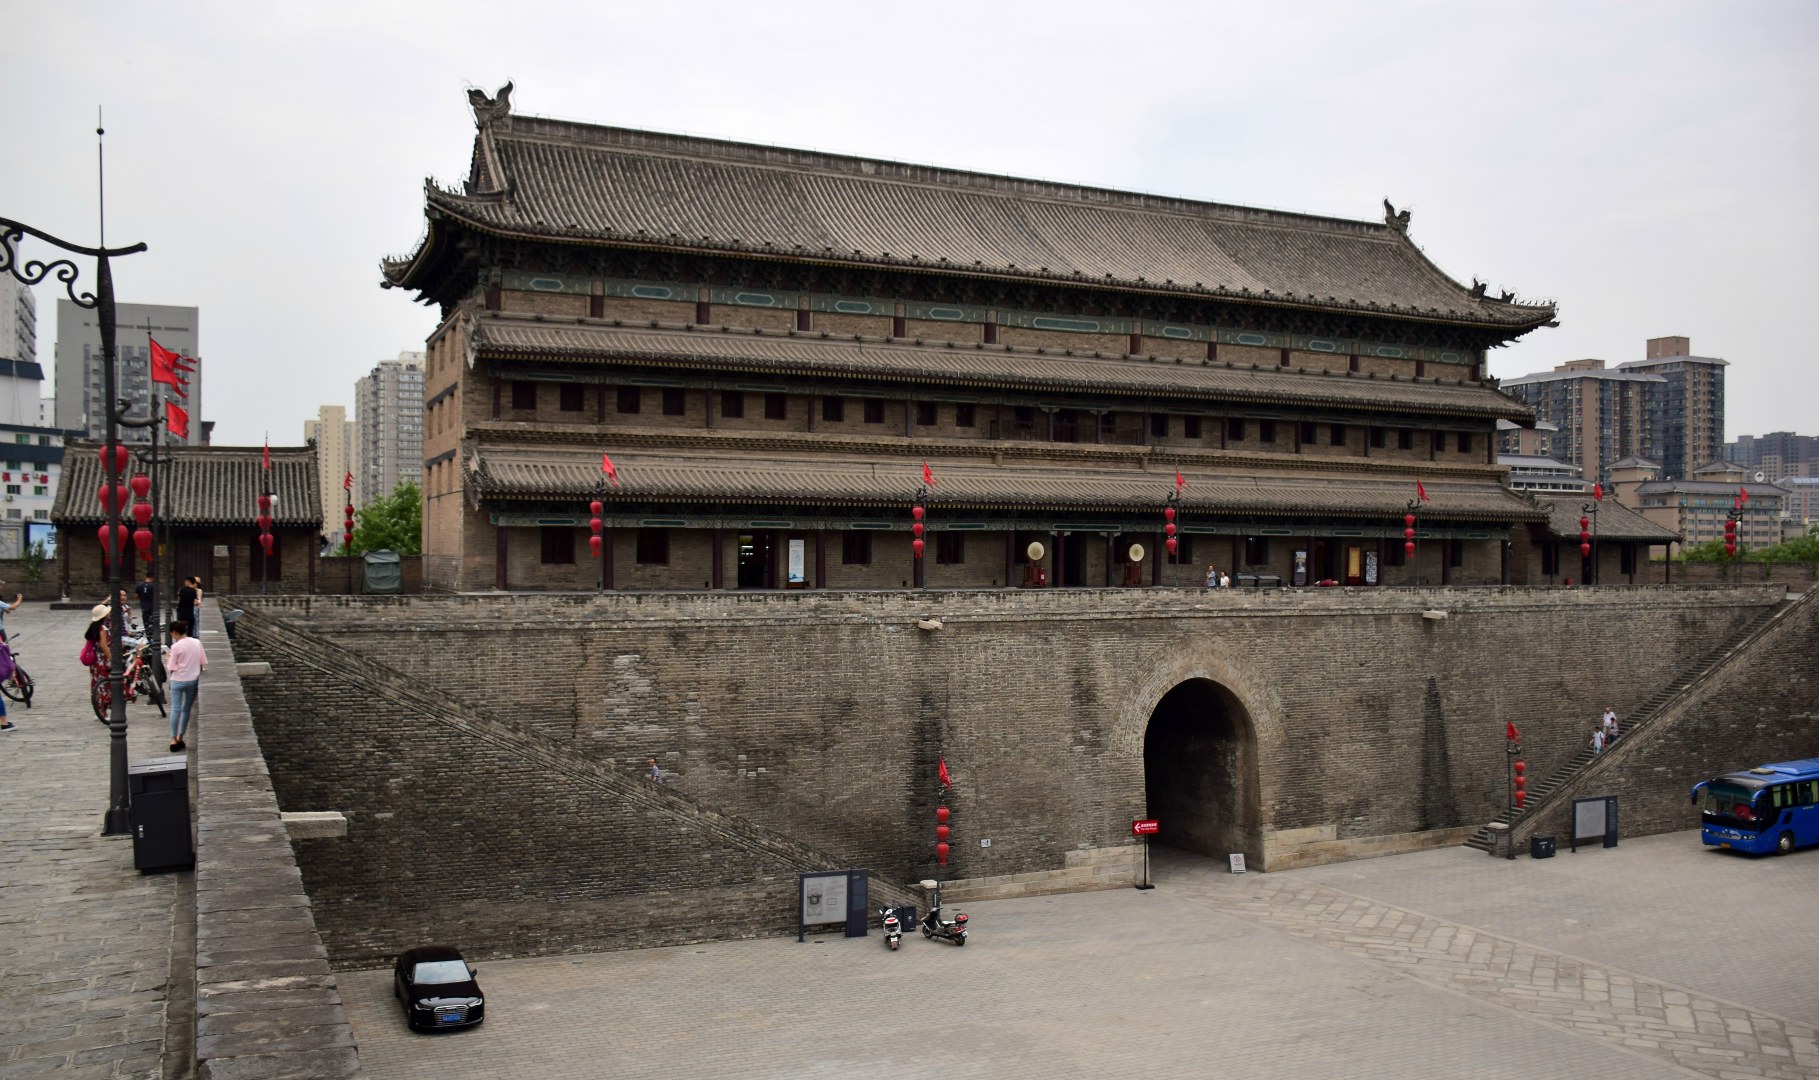 Archery Tower, West Gate, Xi'an